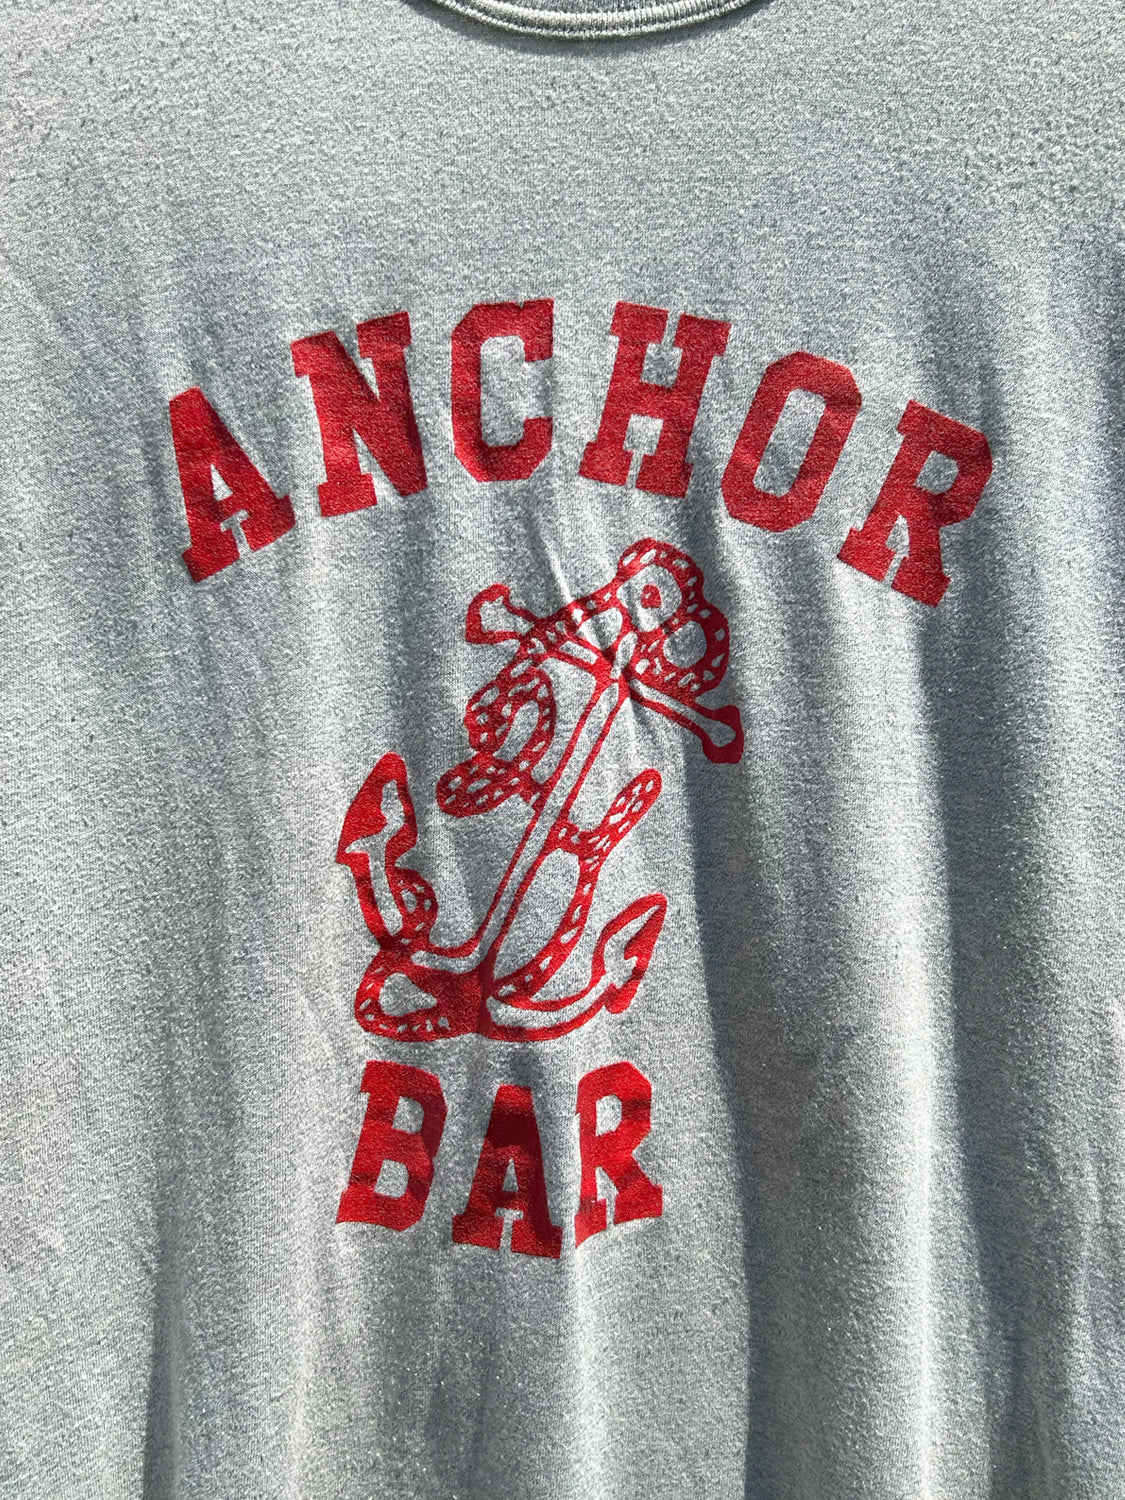 Anchor Bar Tee - 1970s